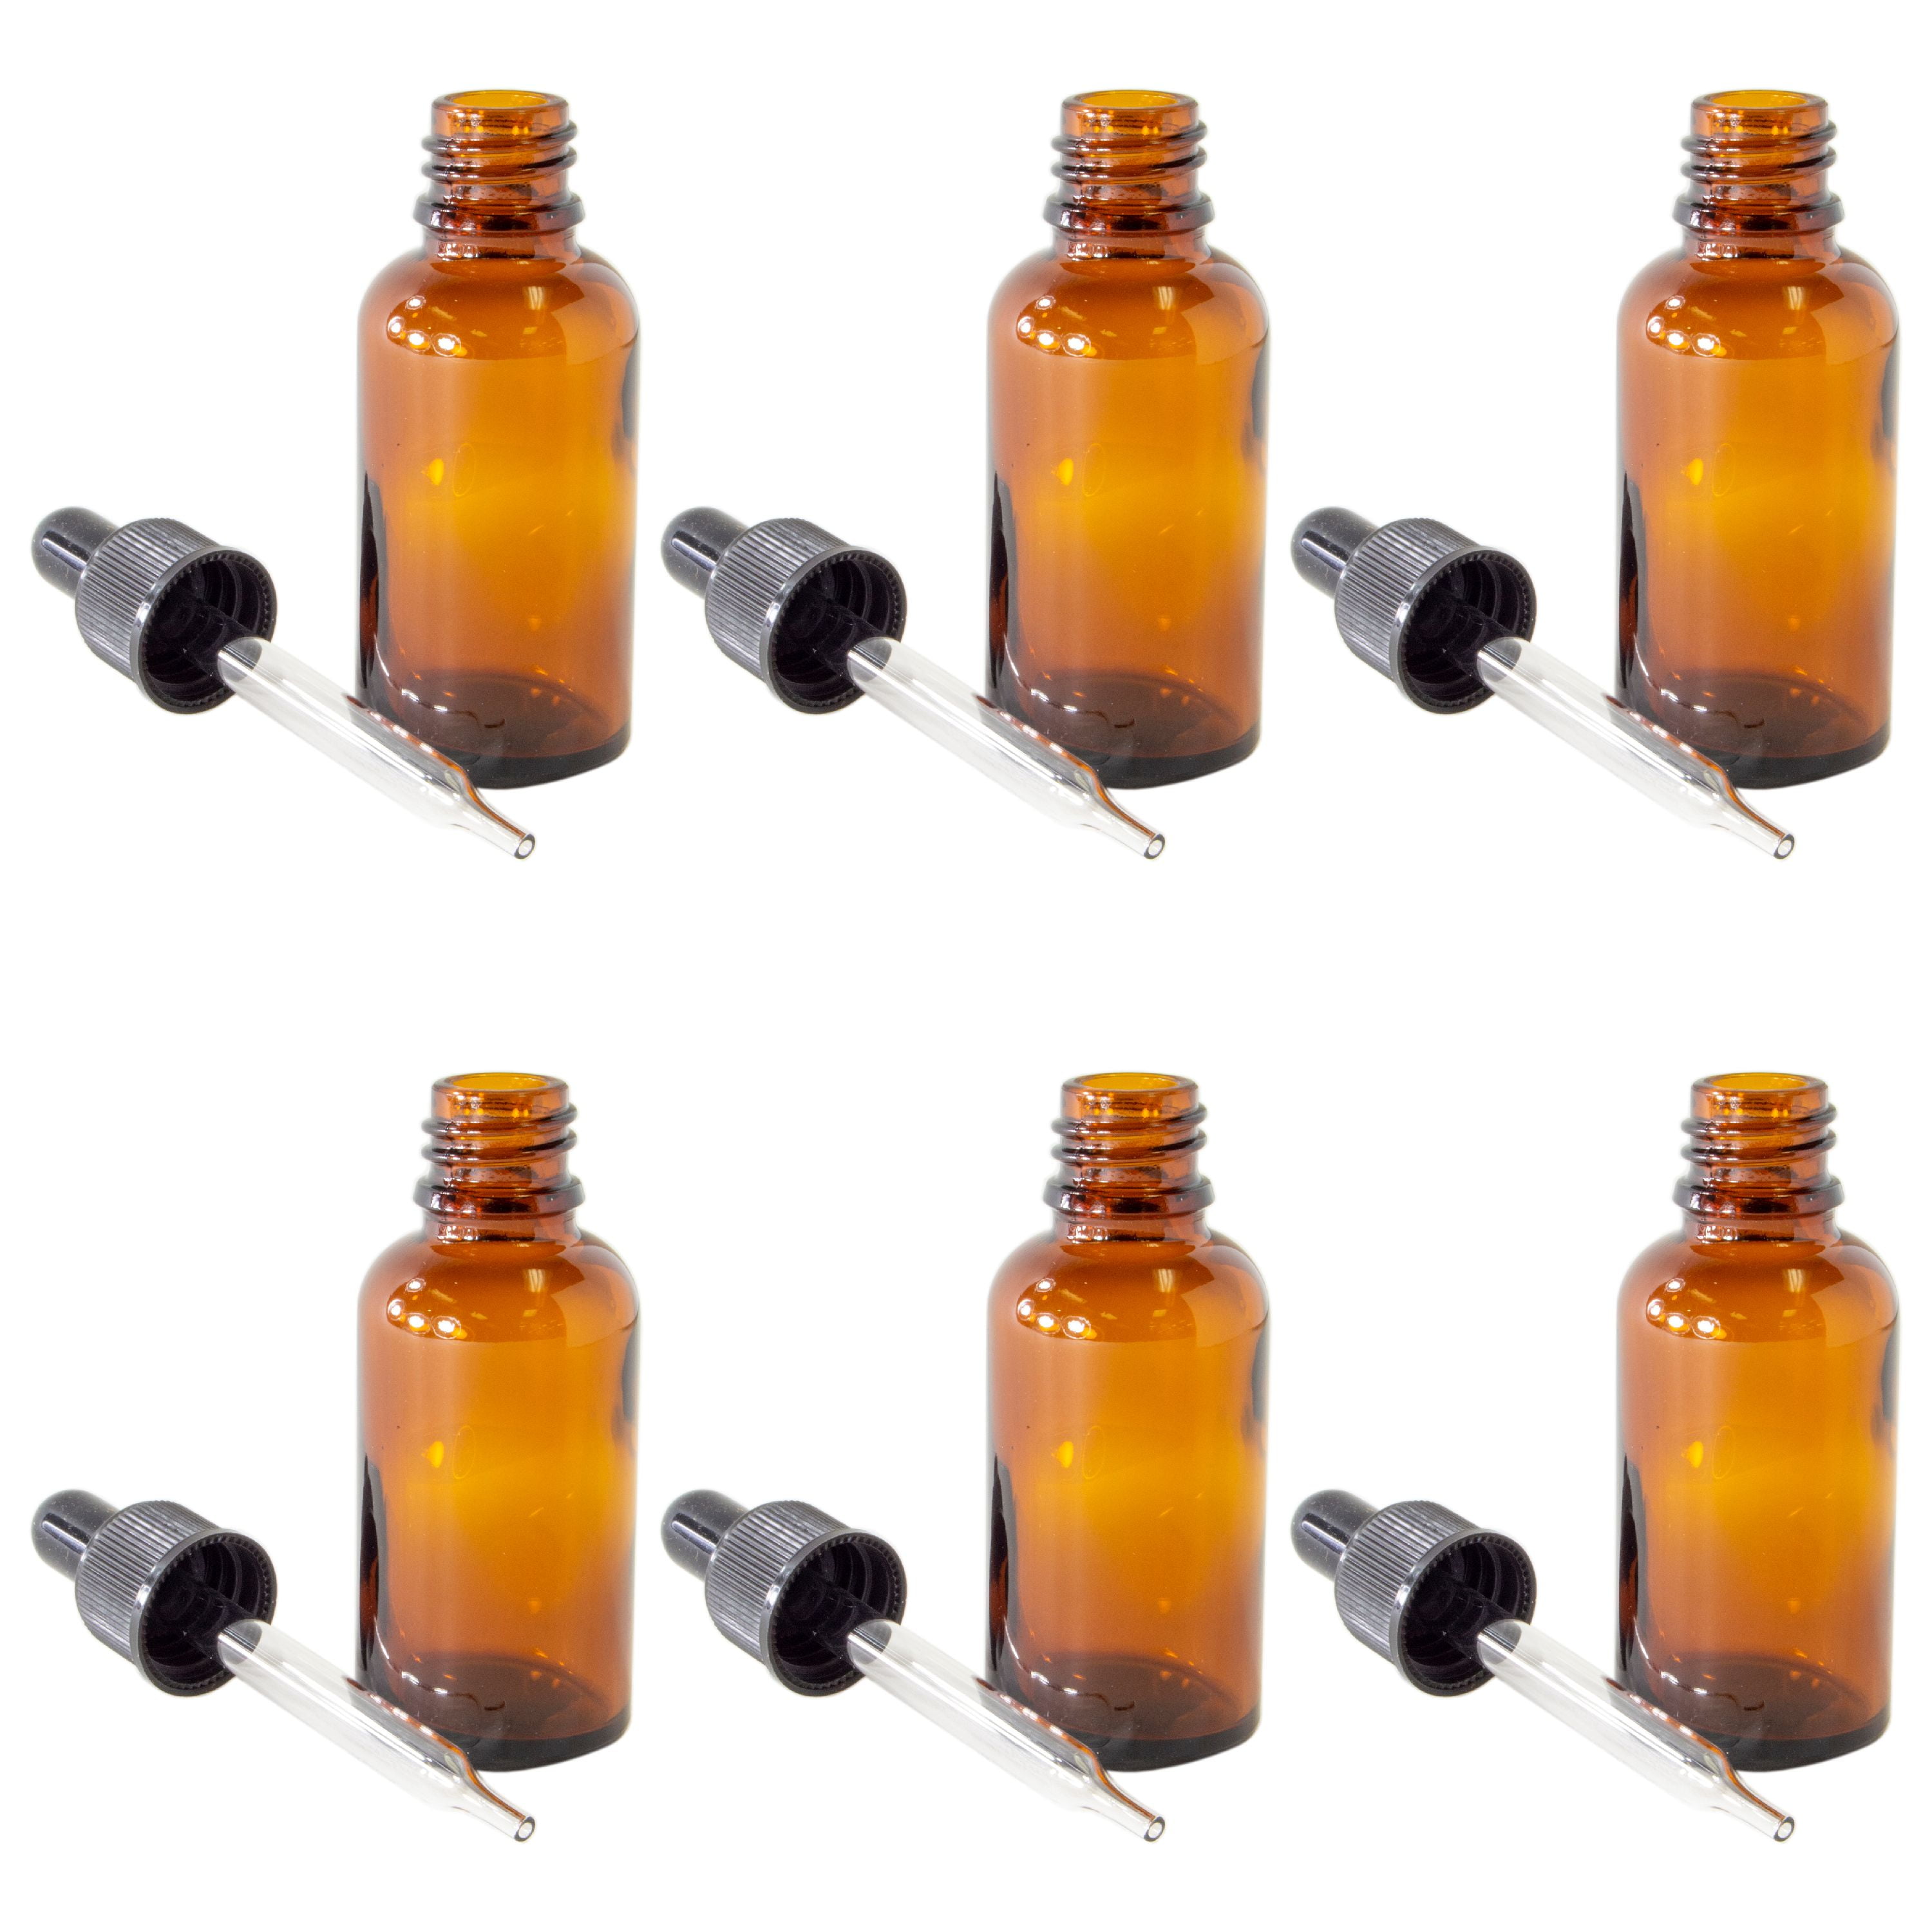 6 pack Garuanteed Non-Break Shipping Glass Eye Dropper - Amber 2 oz Glass Premium Brown Dropper Bottles